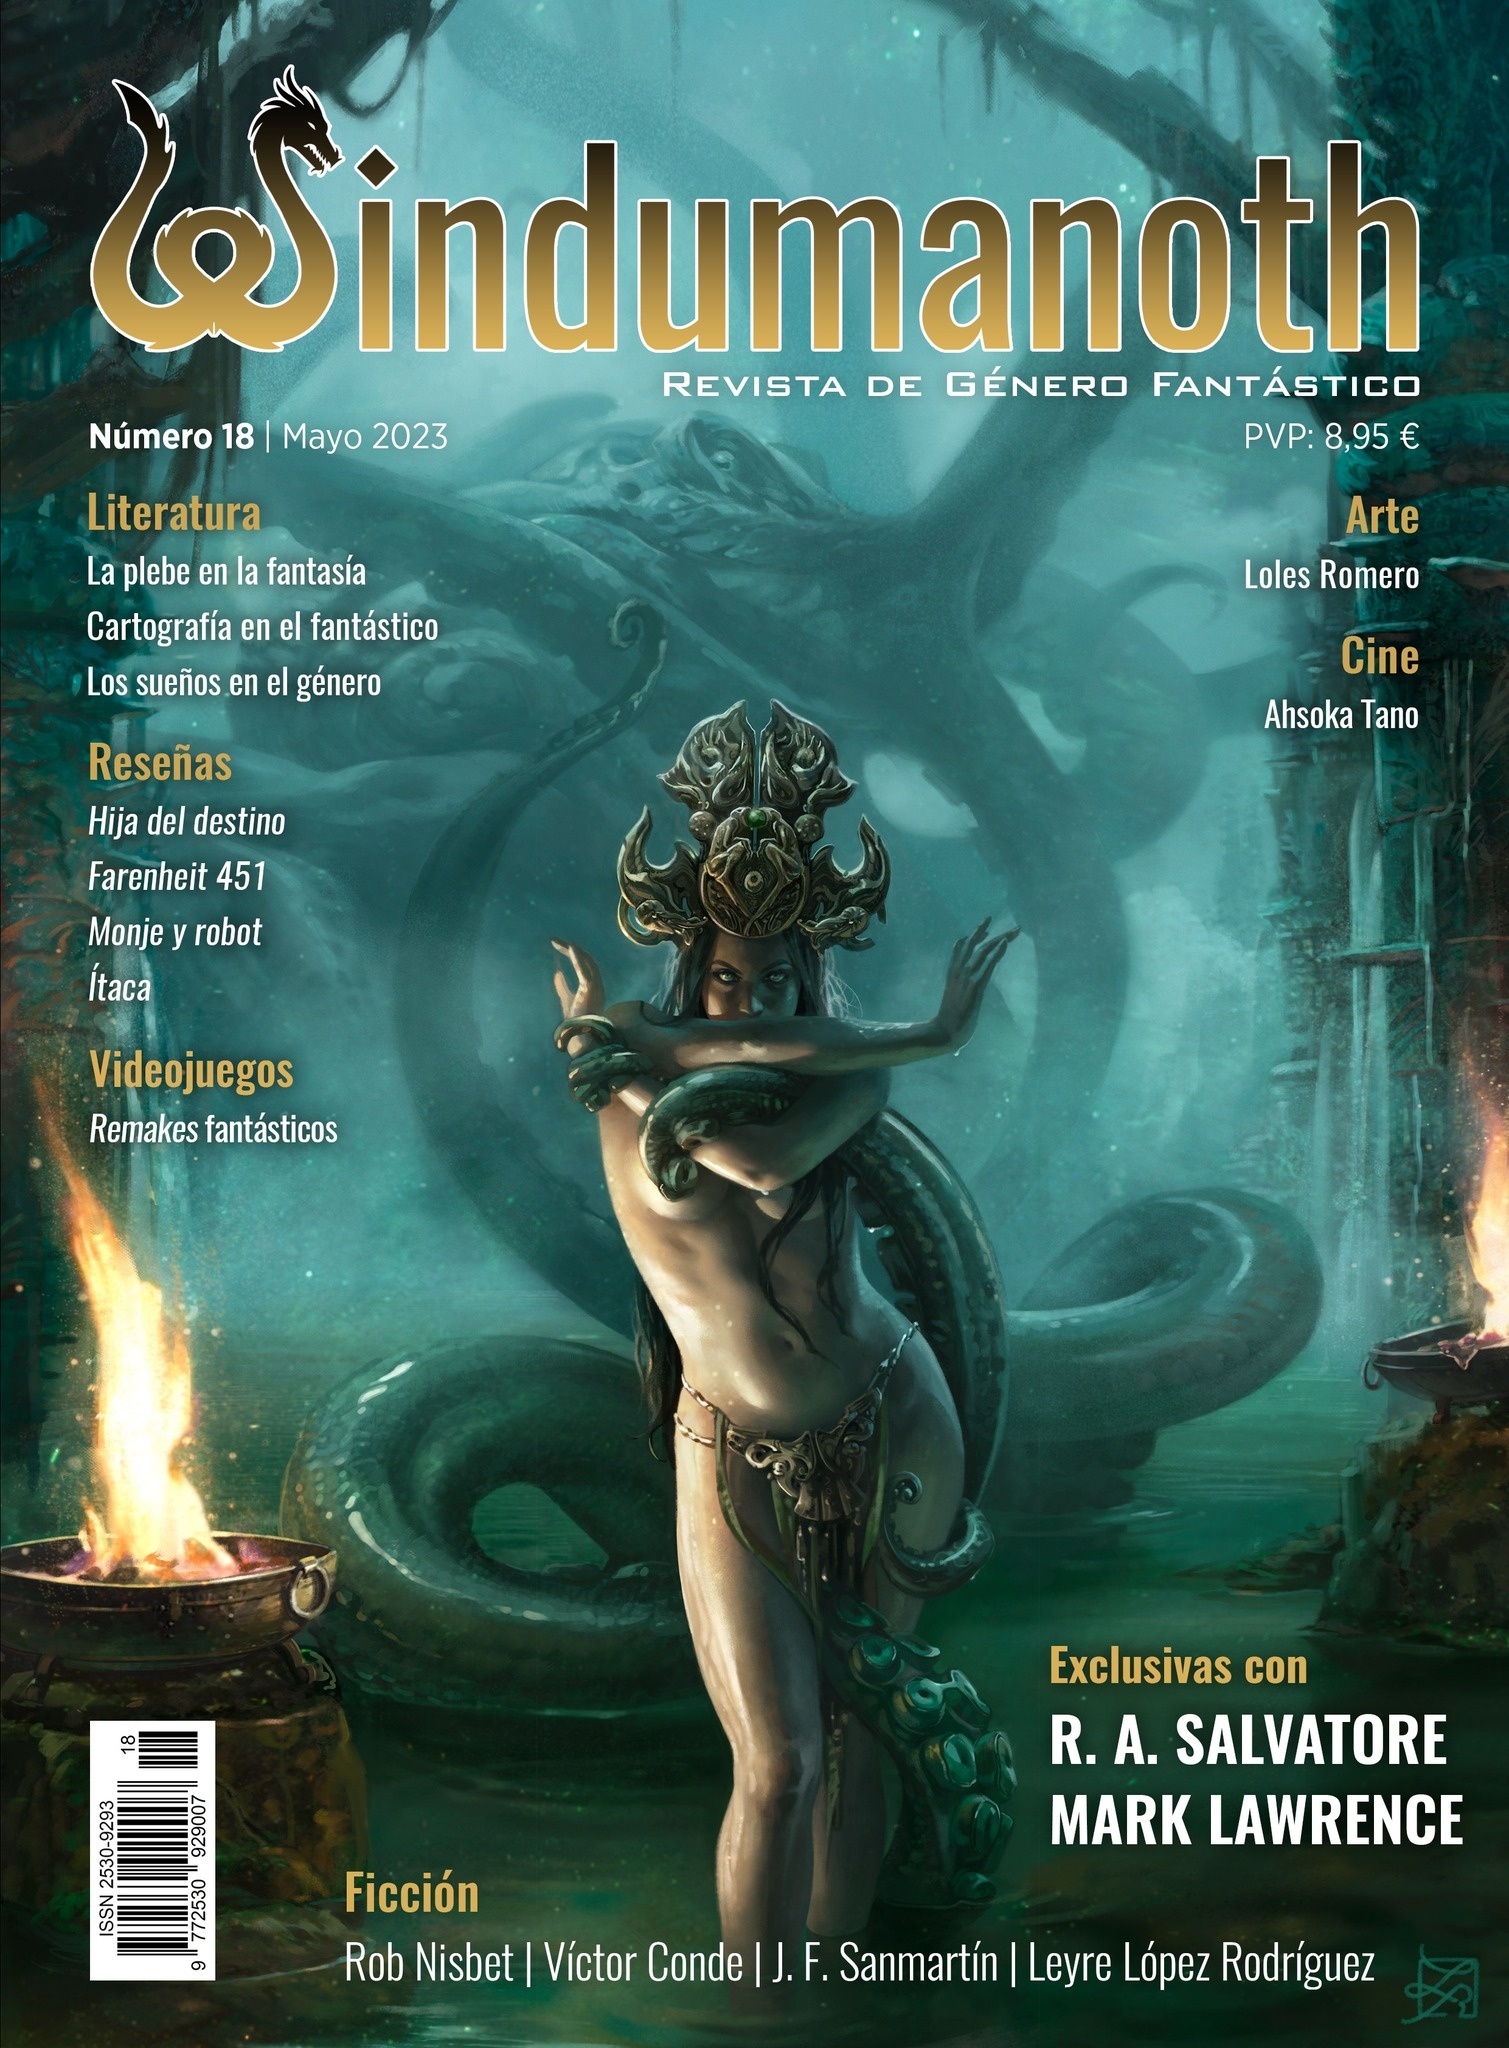 Windumanoth nº 18. Junio 2023 "Revista de género fantástico"